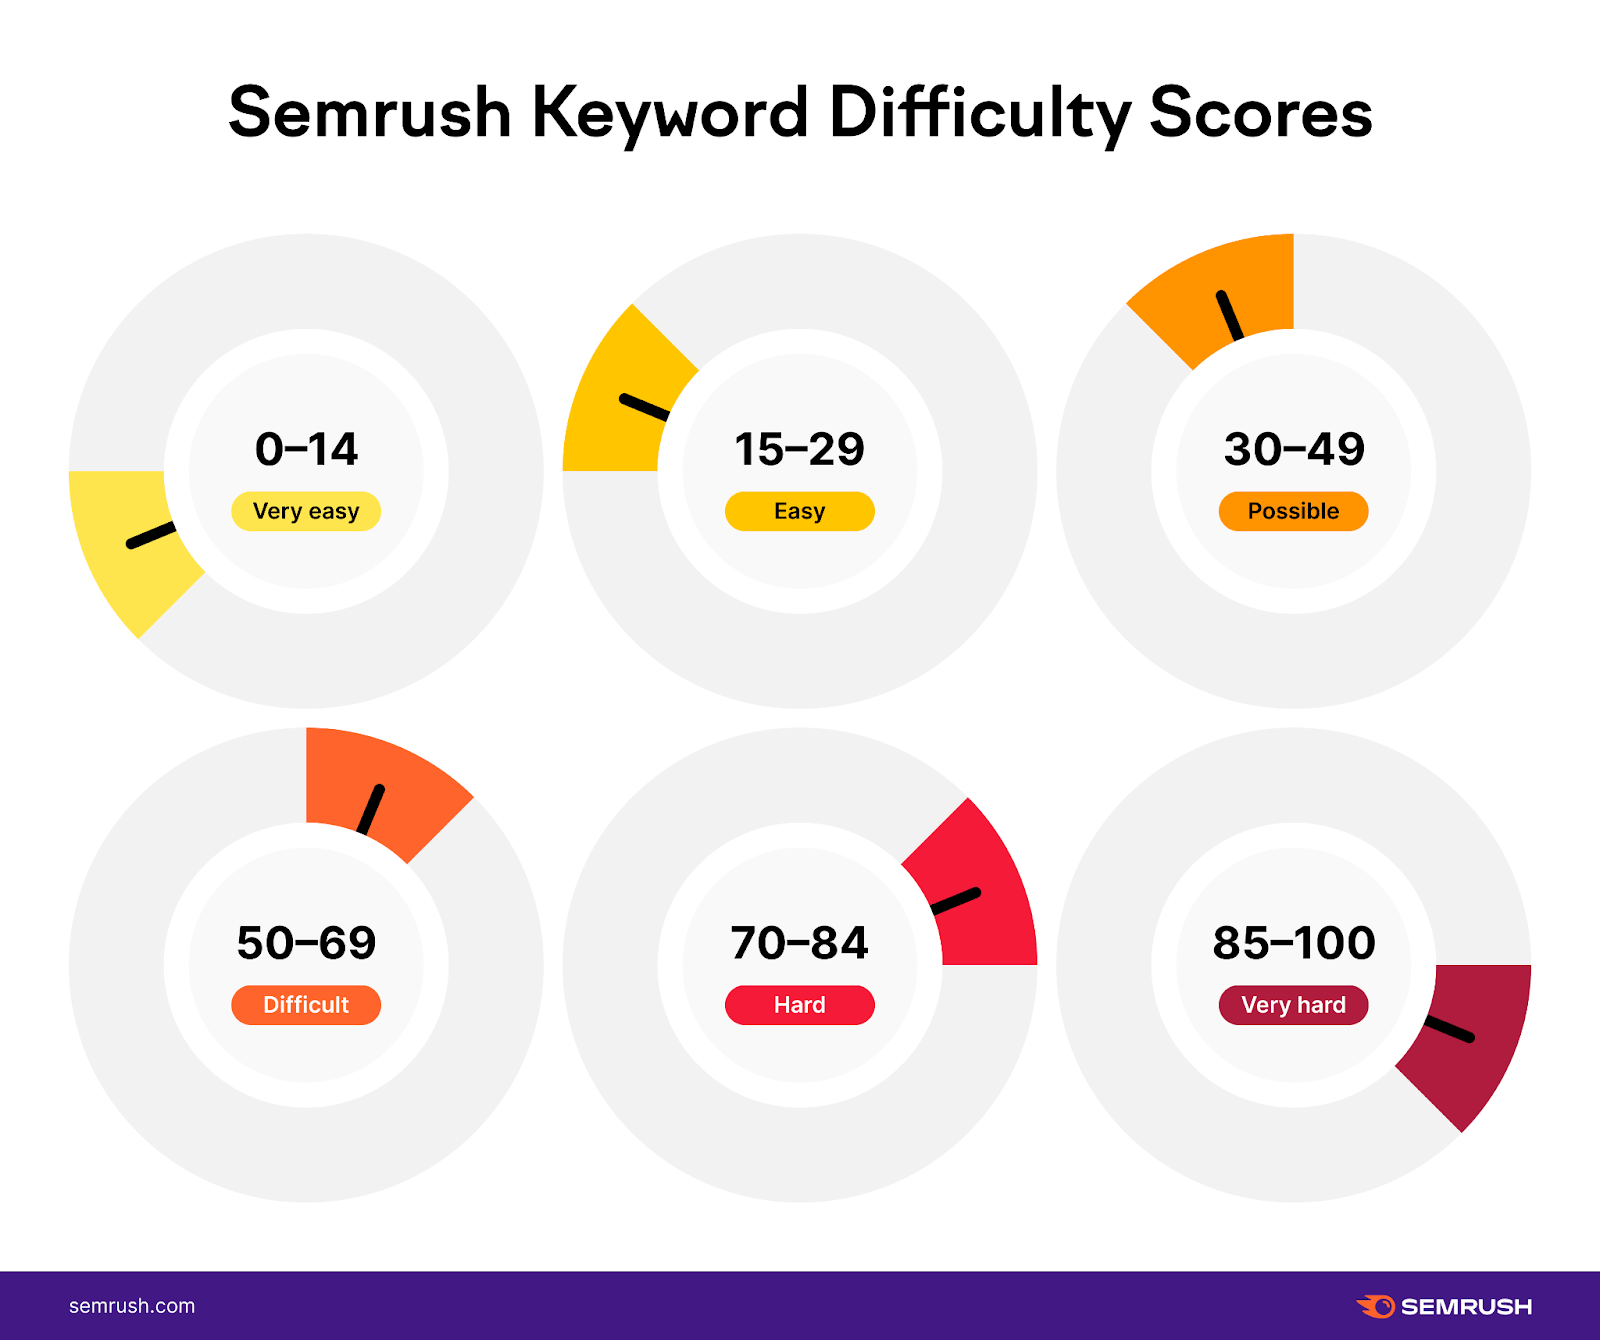 "Semrush Keyword Difficulty Scores" infographic